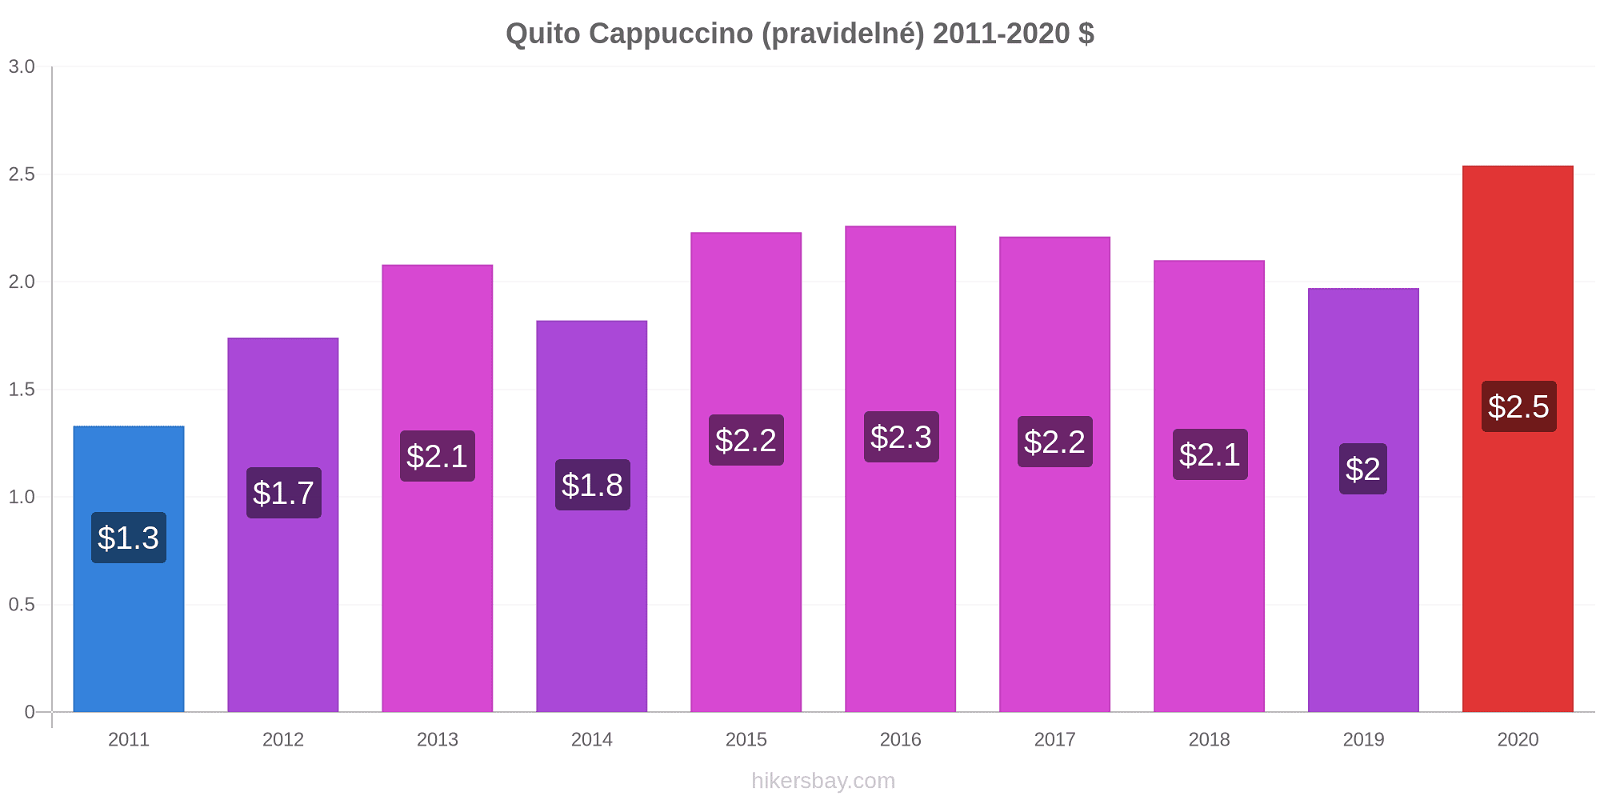 Quito změny cen Cappuccino (pravidelné) hikersbay.com